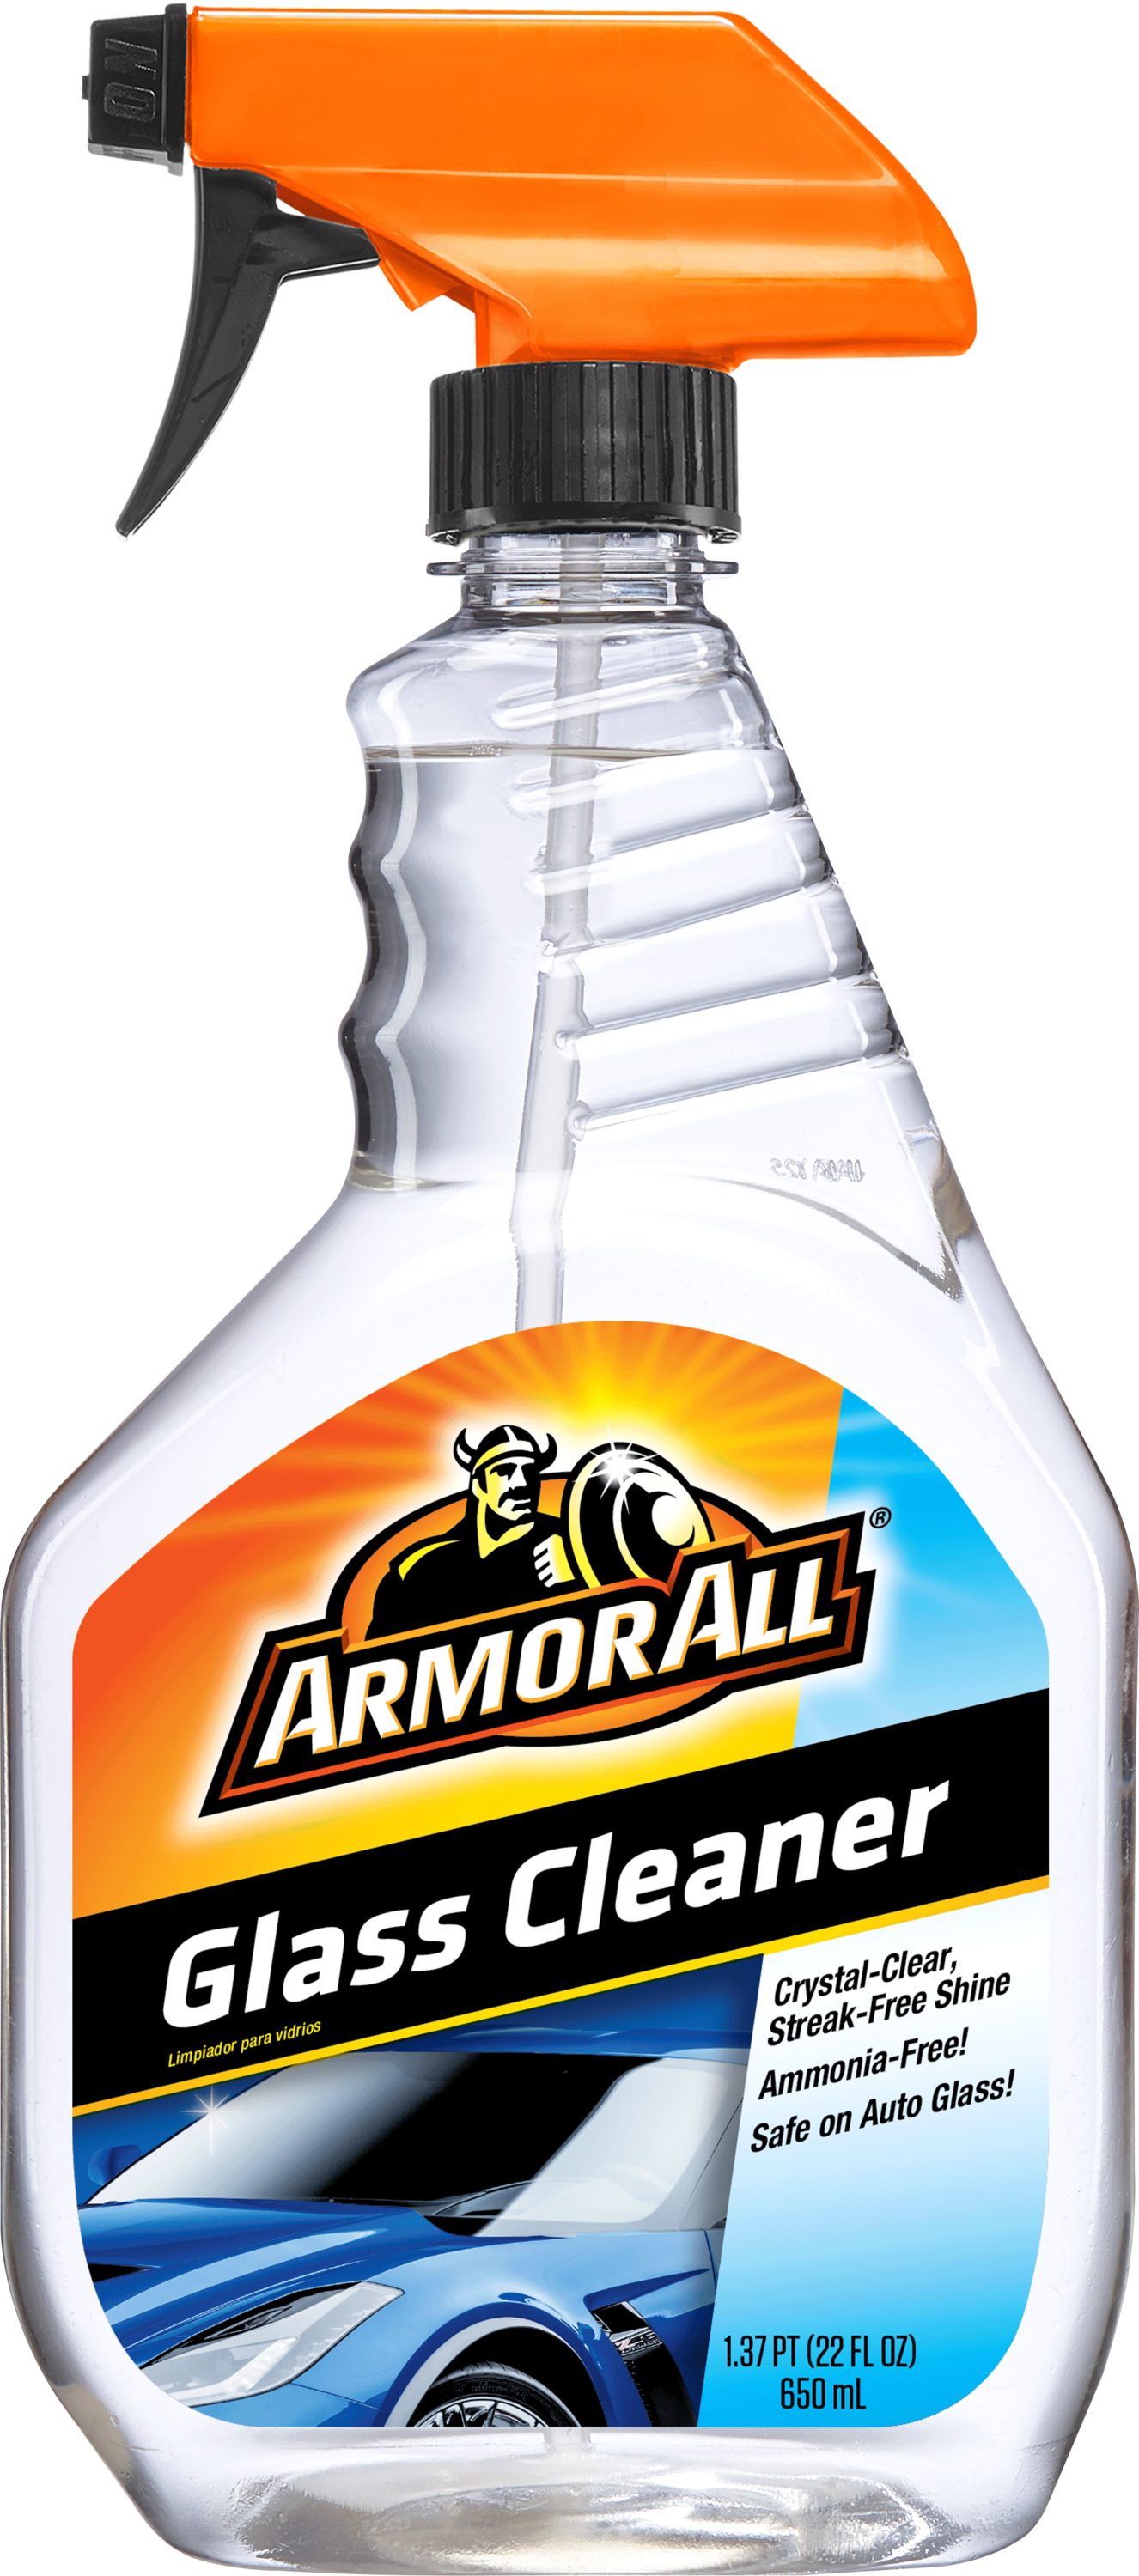 NEW ArmorAll Glass Wipes 30 Wipes, Streak Free, Ammonia Free, Tinted Safe